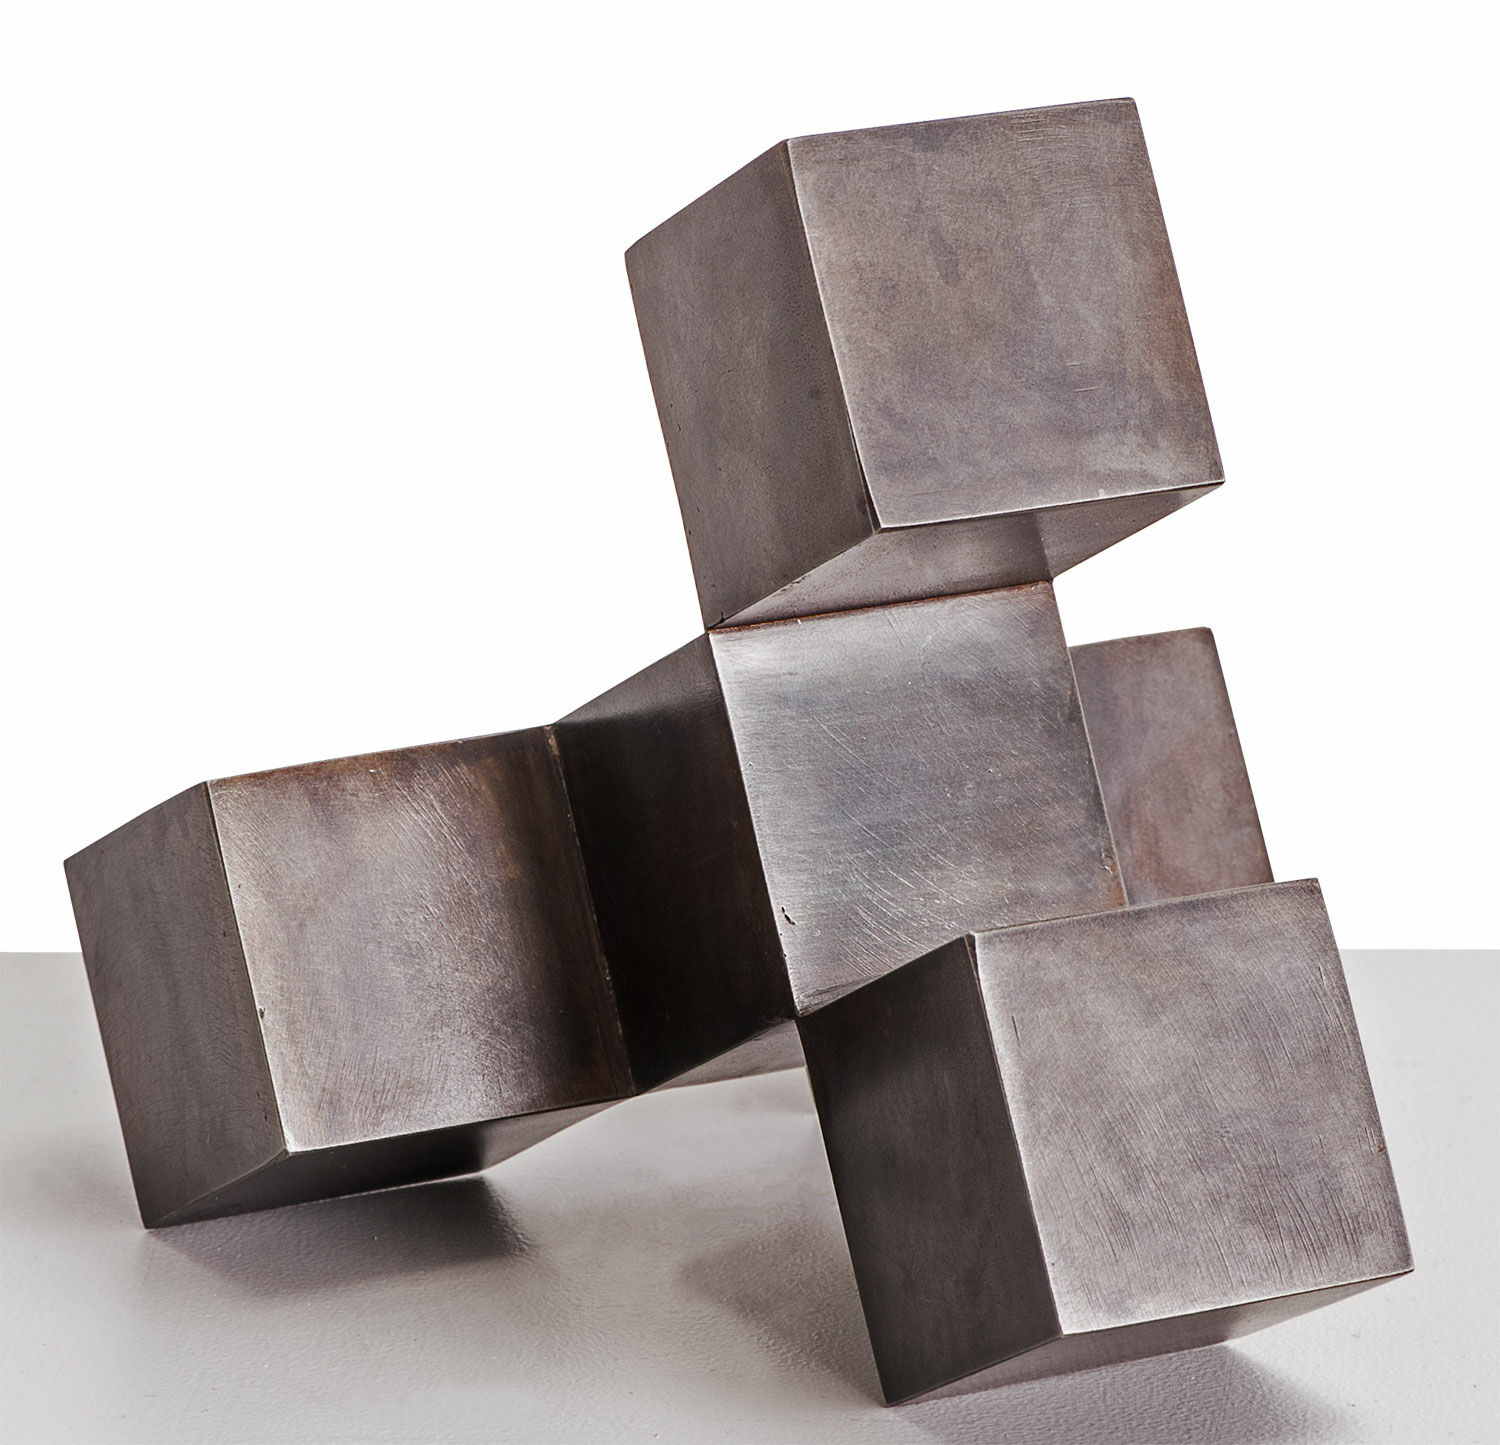 Sculpture en acier "CUBECUBE" (2010) von Stephan Siebers